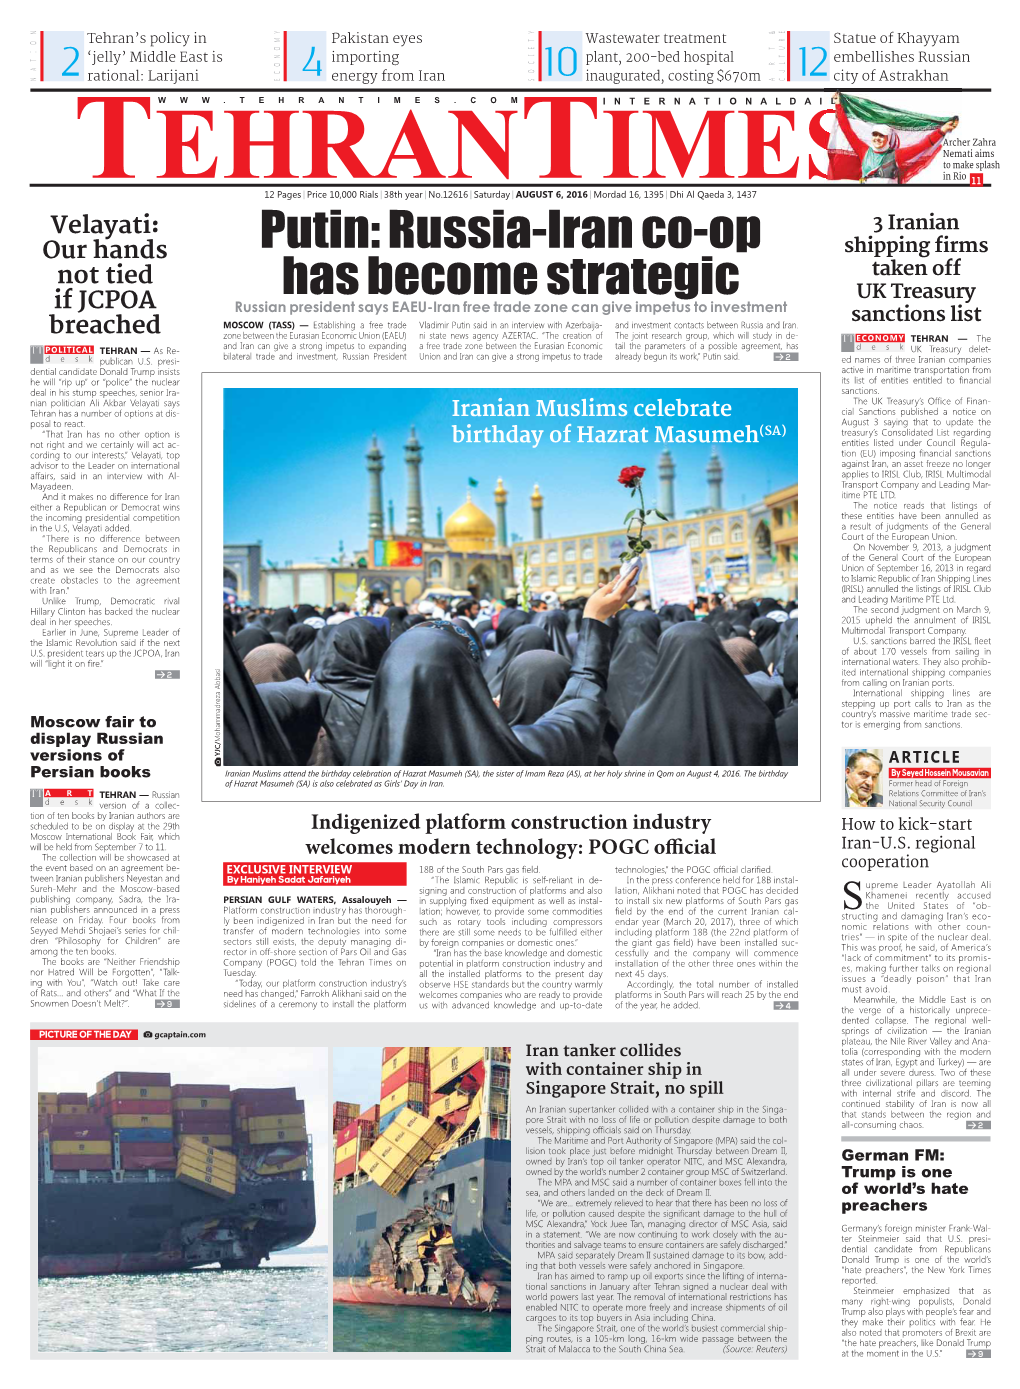 Putin: Russia-Iran Co-Op Has Become Strategic